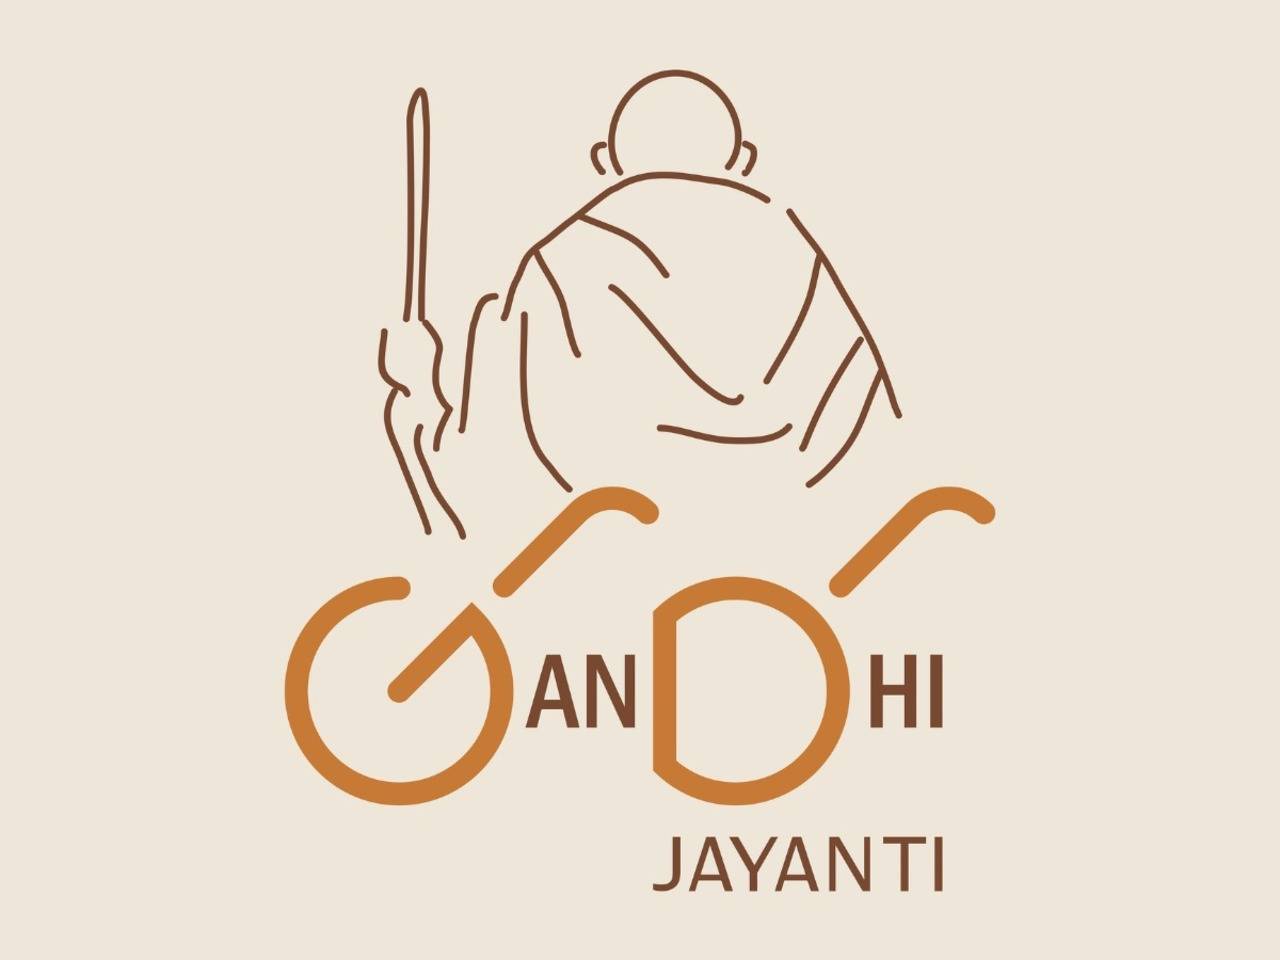 Hand Draw Mahatma Gandhi Sketch For Gandhi Jayanti Background Royalty Free  SVG, Cliparts, Vectors, And Stock Illustration. Image 191071708.